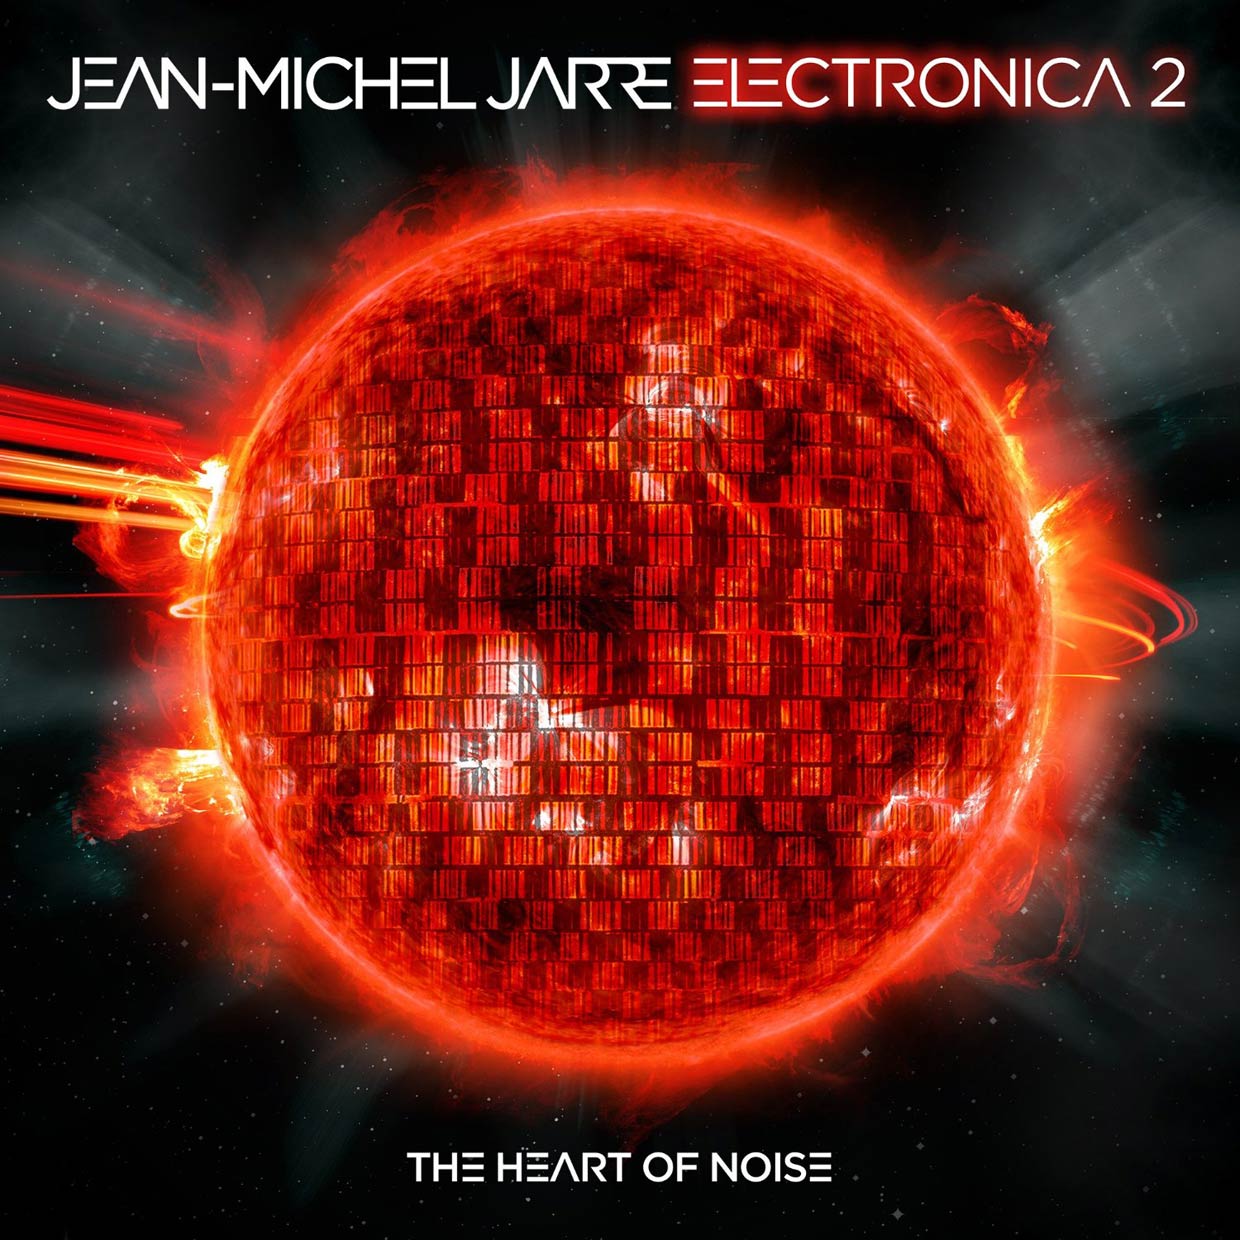 Jean-Michel Jarre: Electronica 2: The heart of noise, la portada del disco